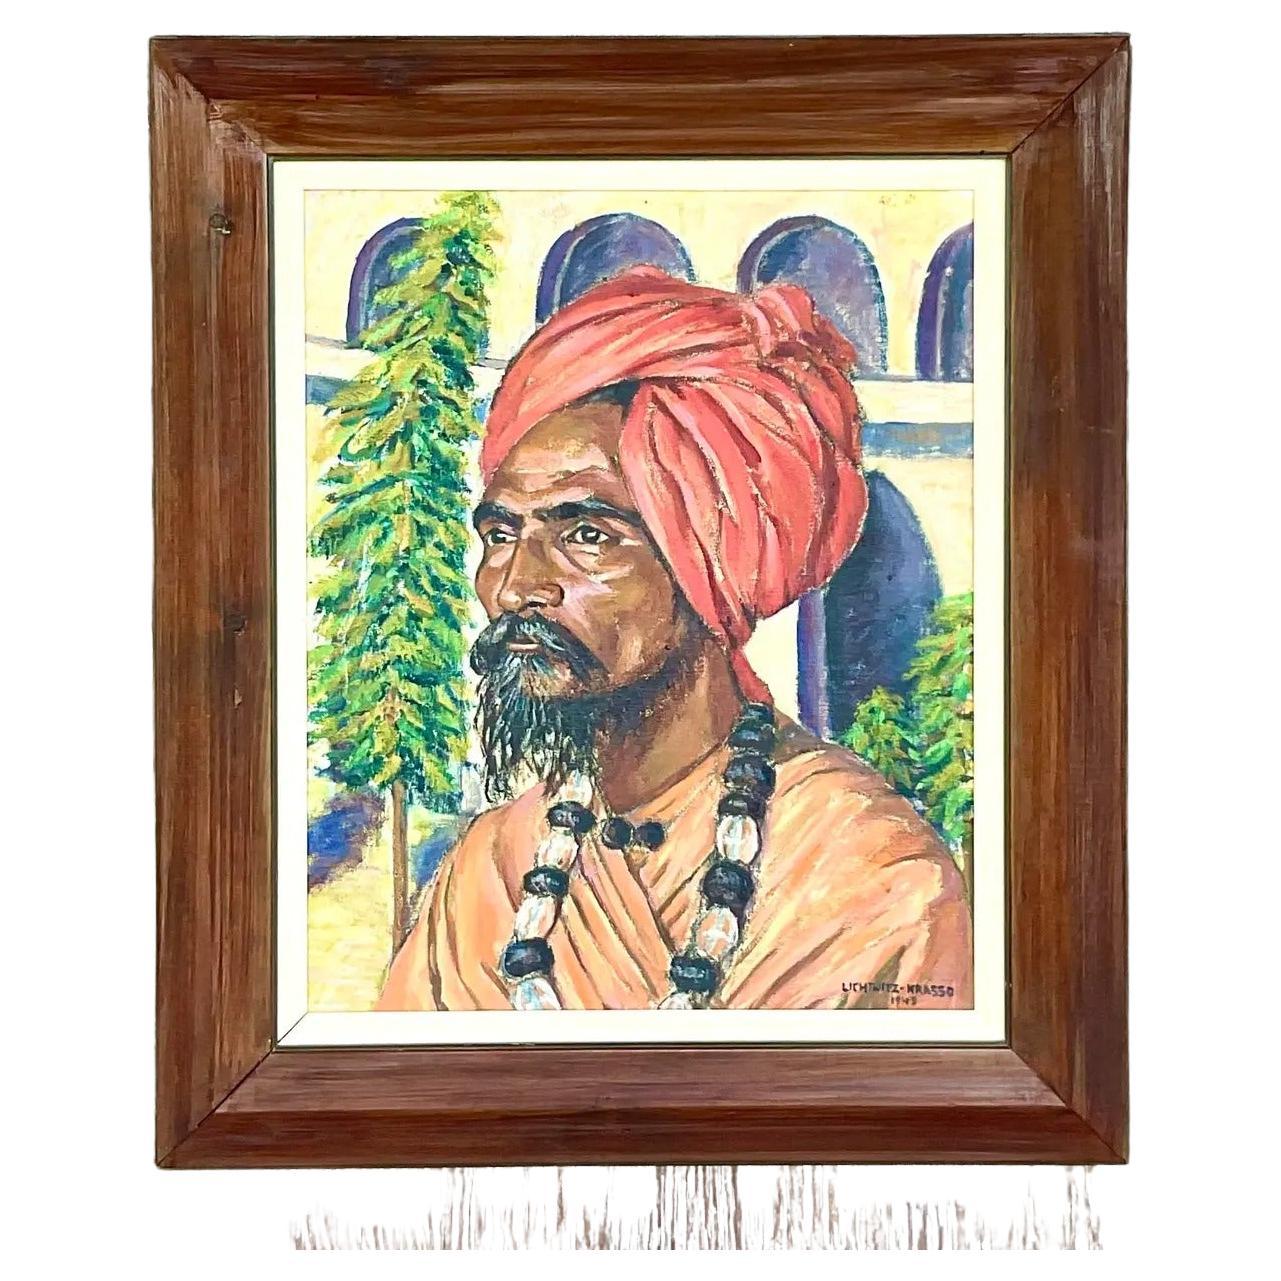 Vintage Boho Signed 1941 Original Oil Painting of Man in Turban